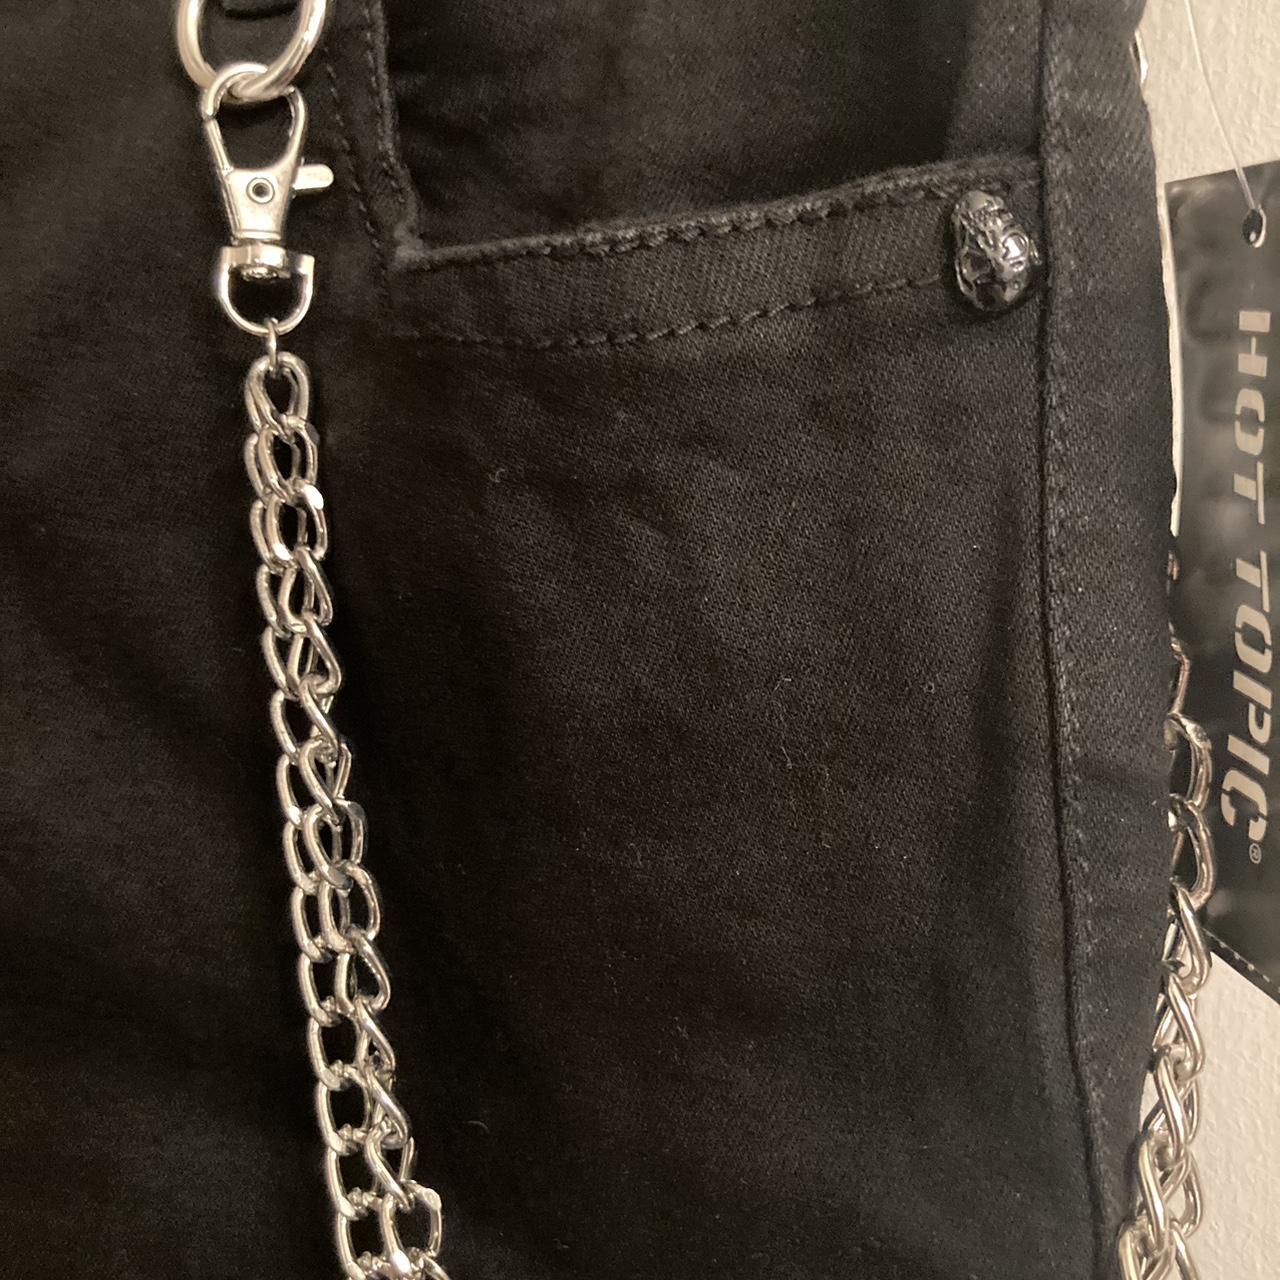 Hot Topic Black Fishnet Destructed Chain Jeans